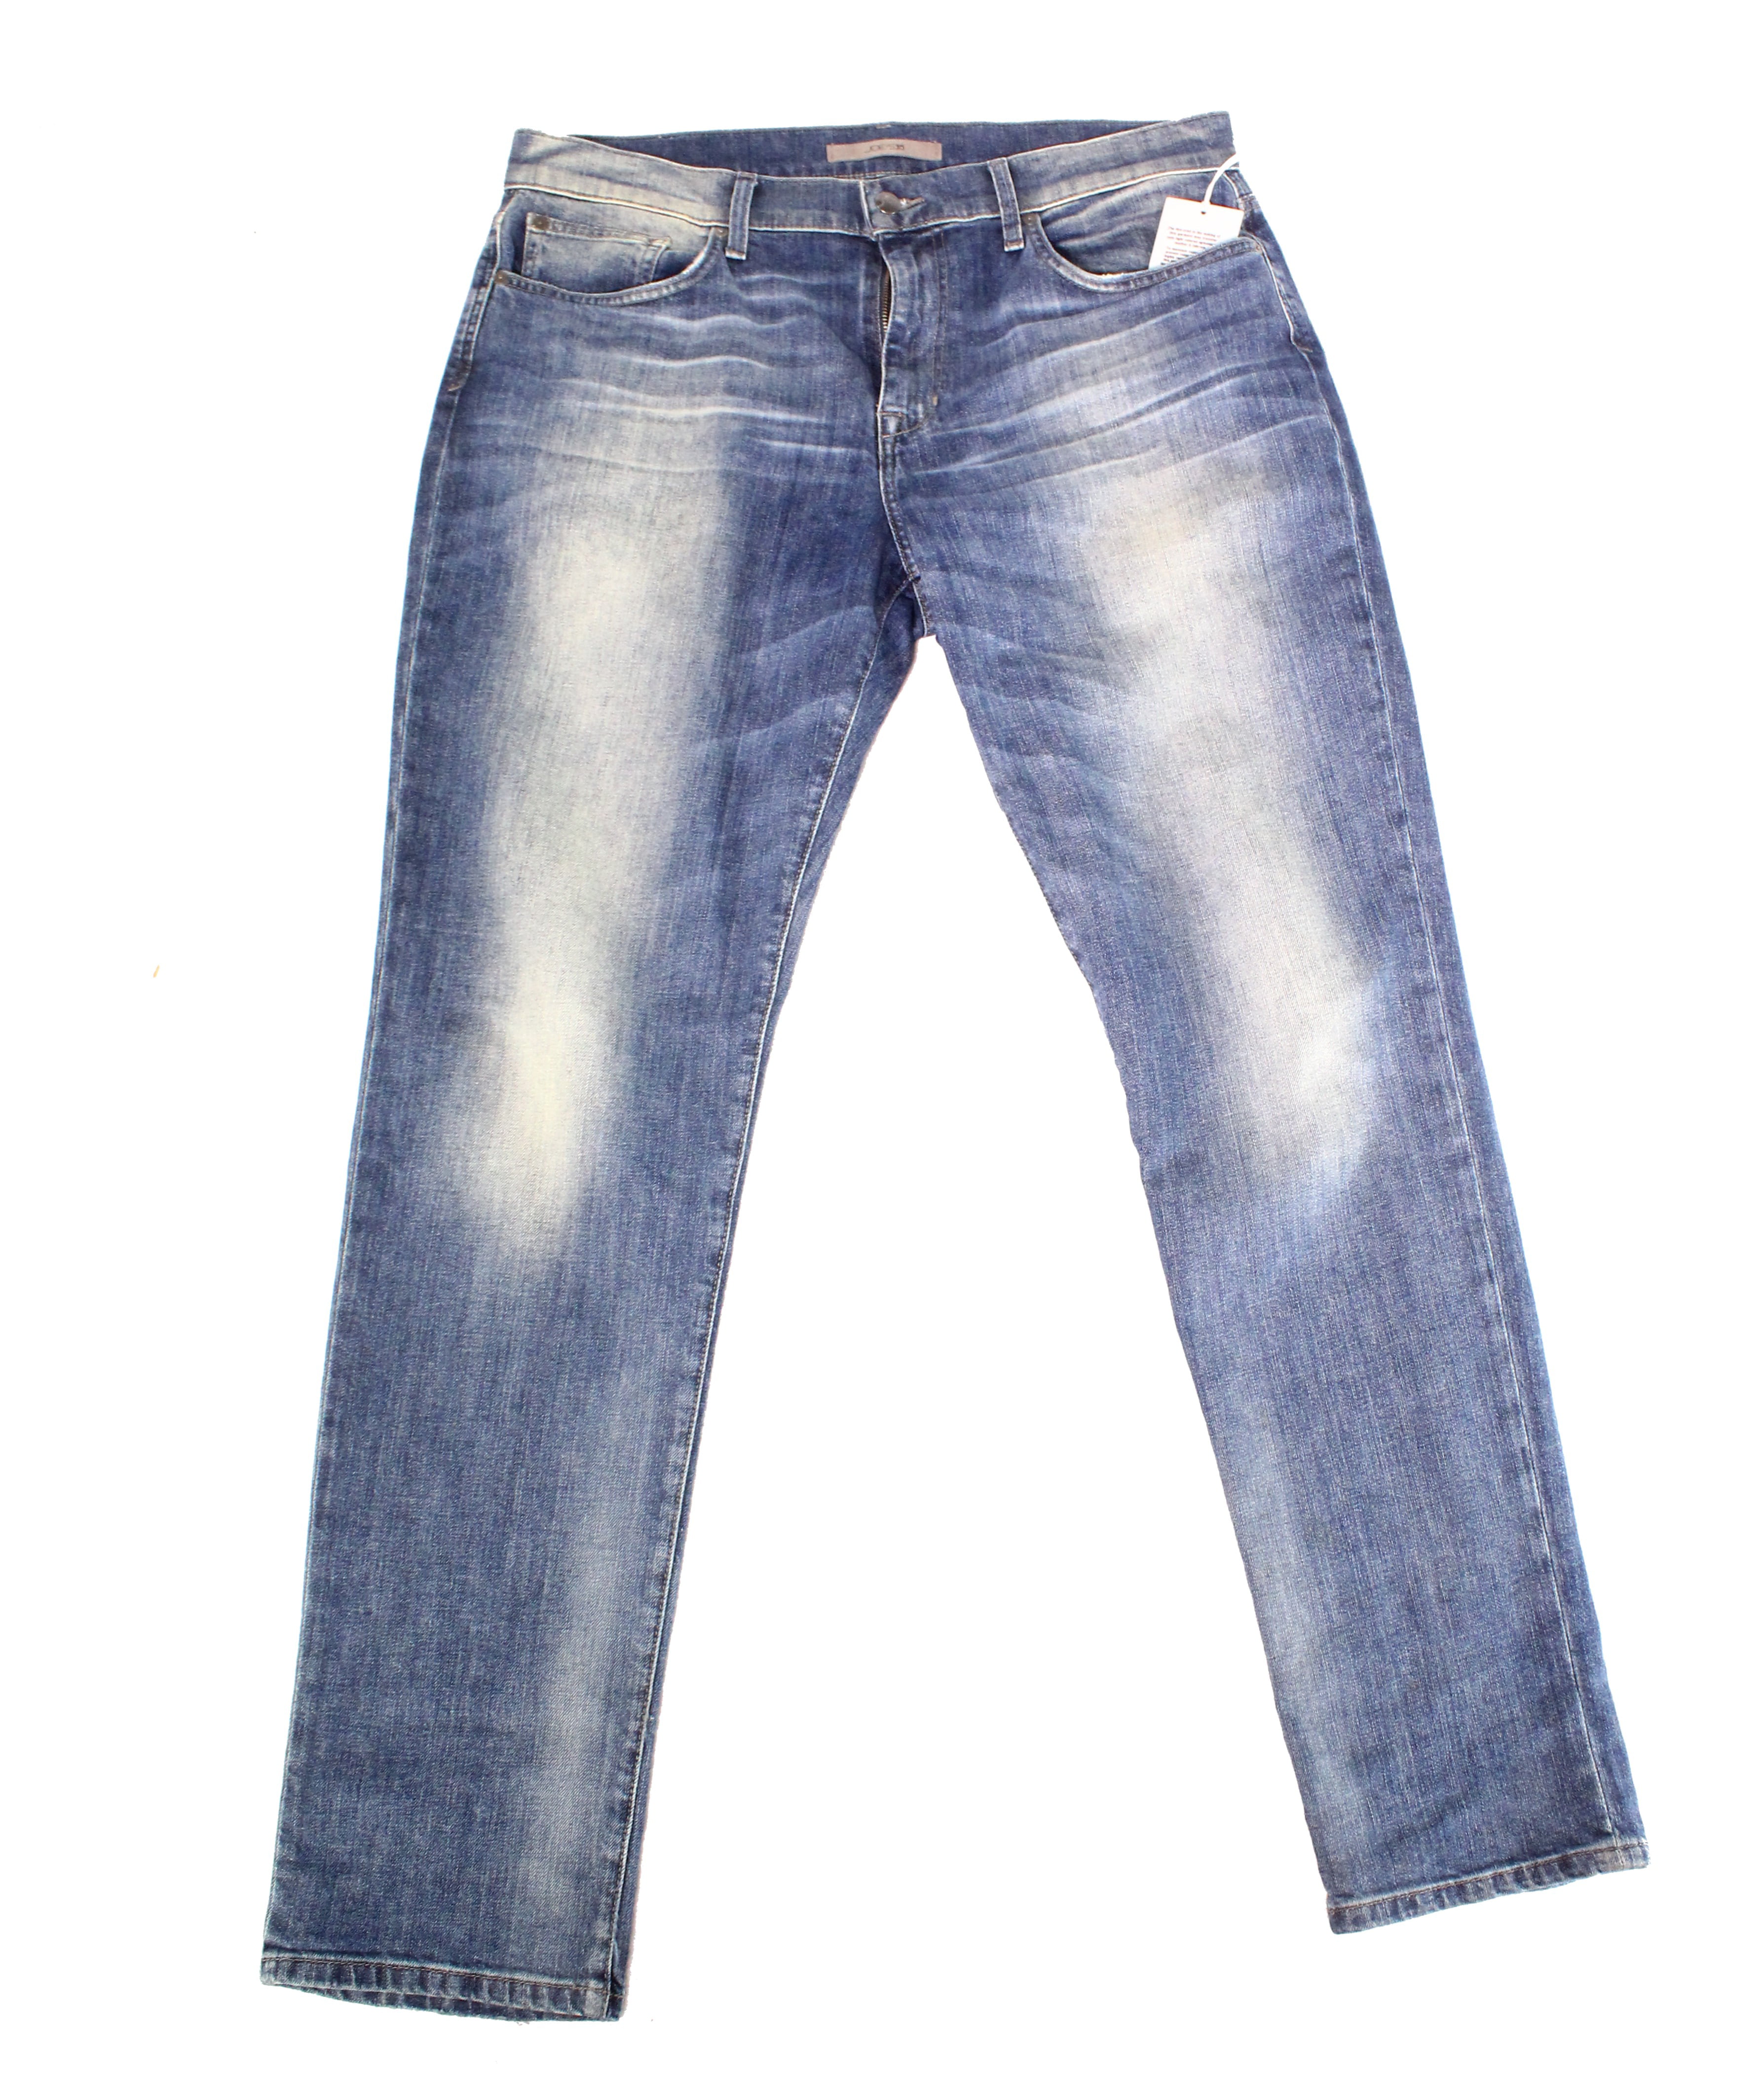 JOE'S Jeans - Mens Jeans Medium 34x35 Classic Straight Leg Stretch 34 ...